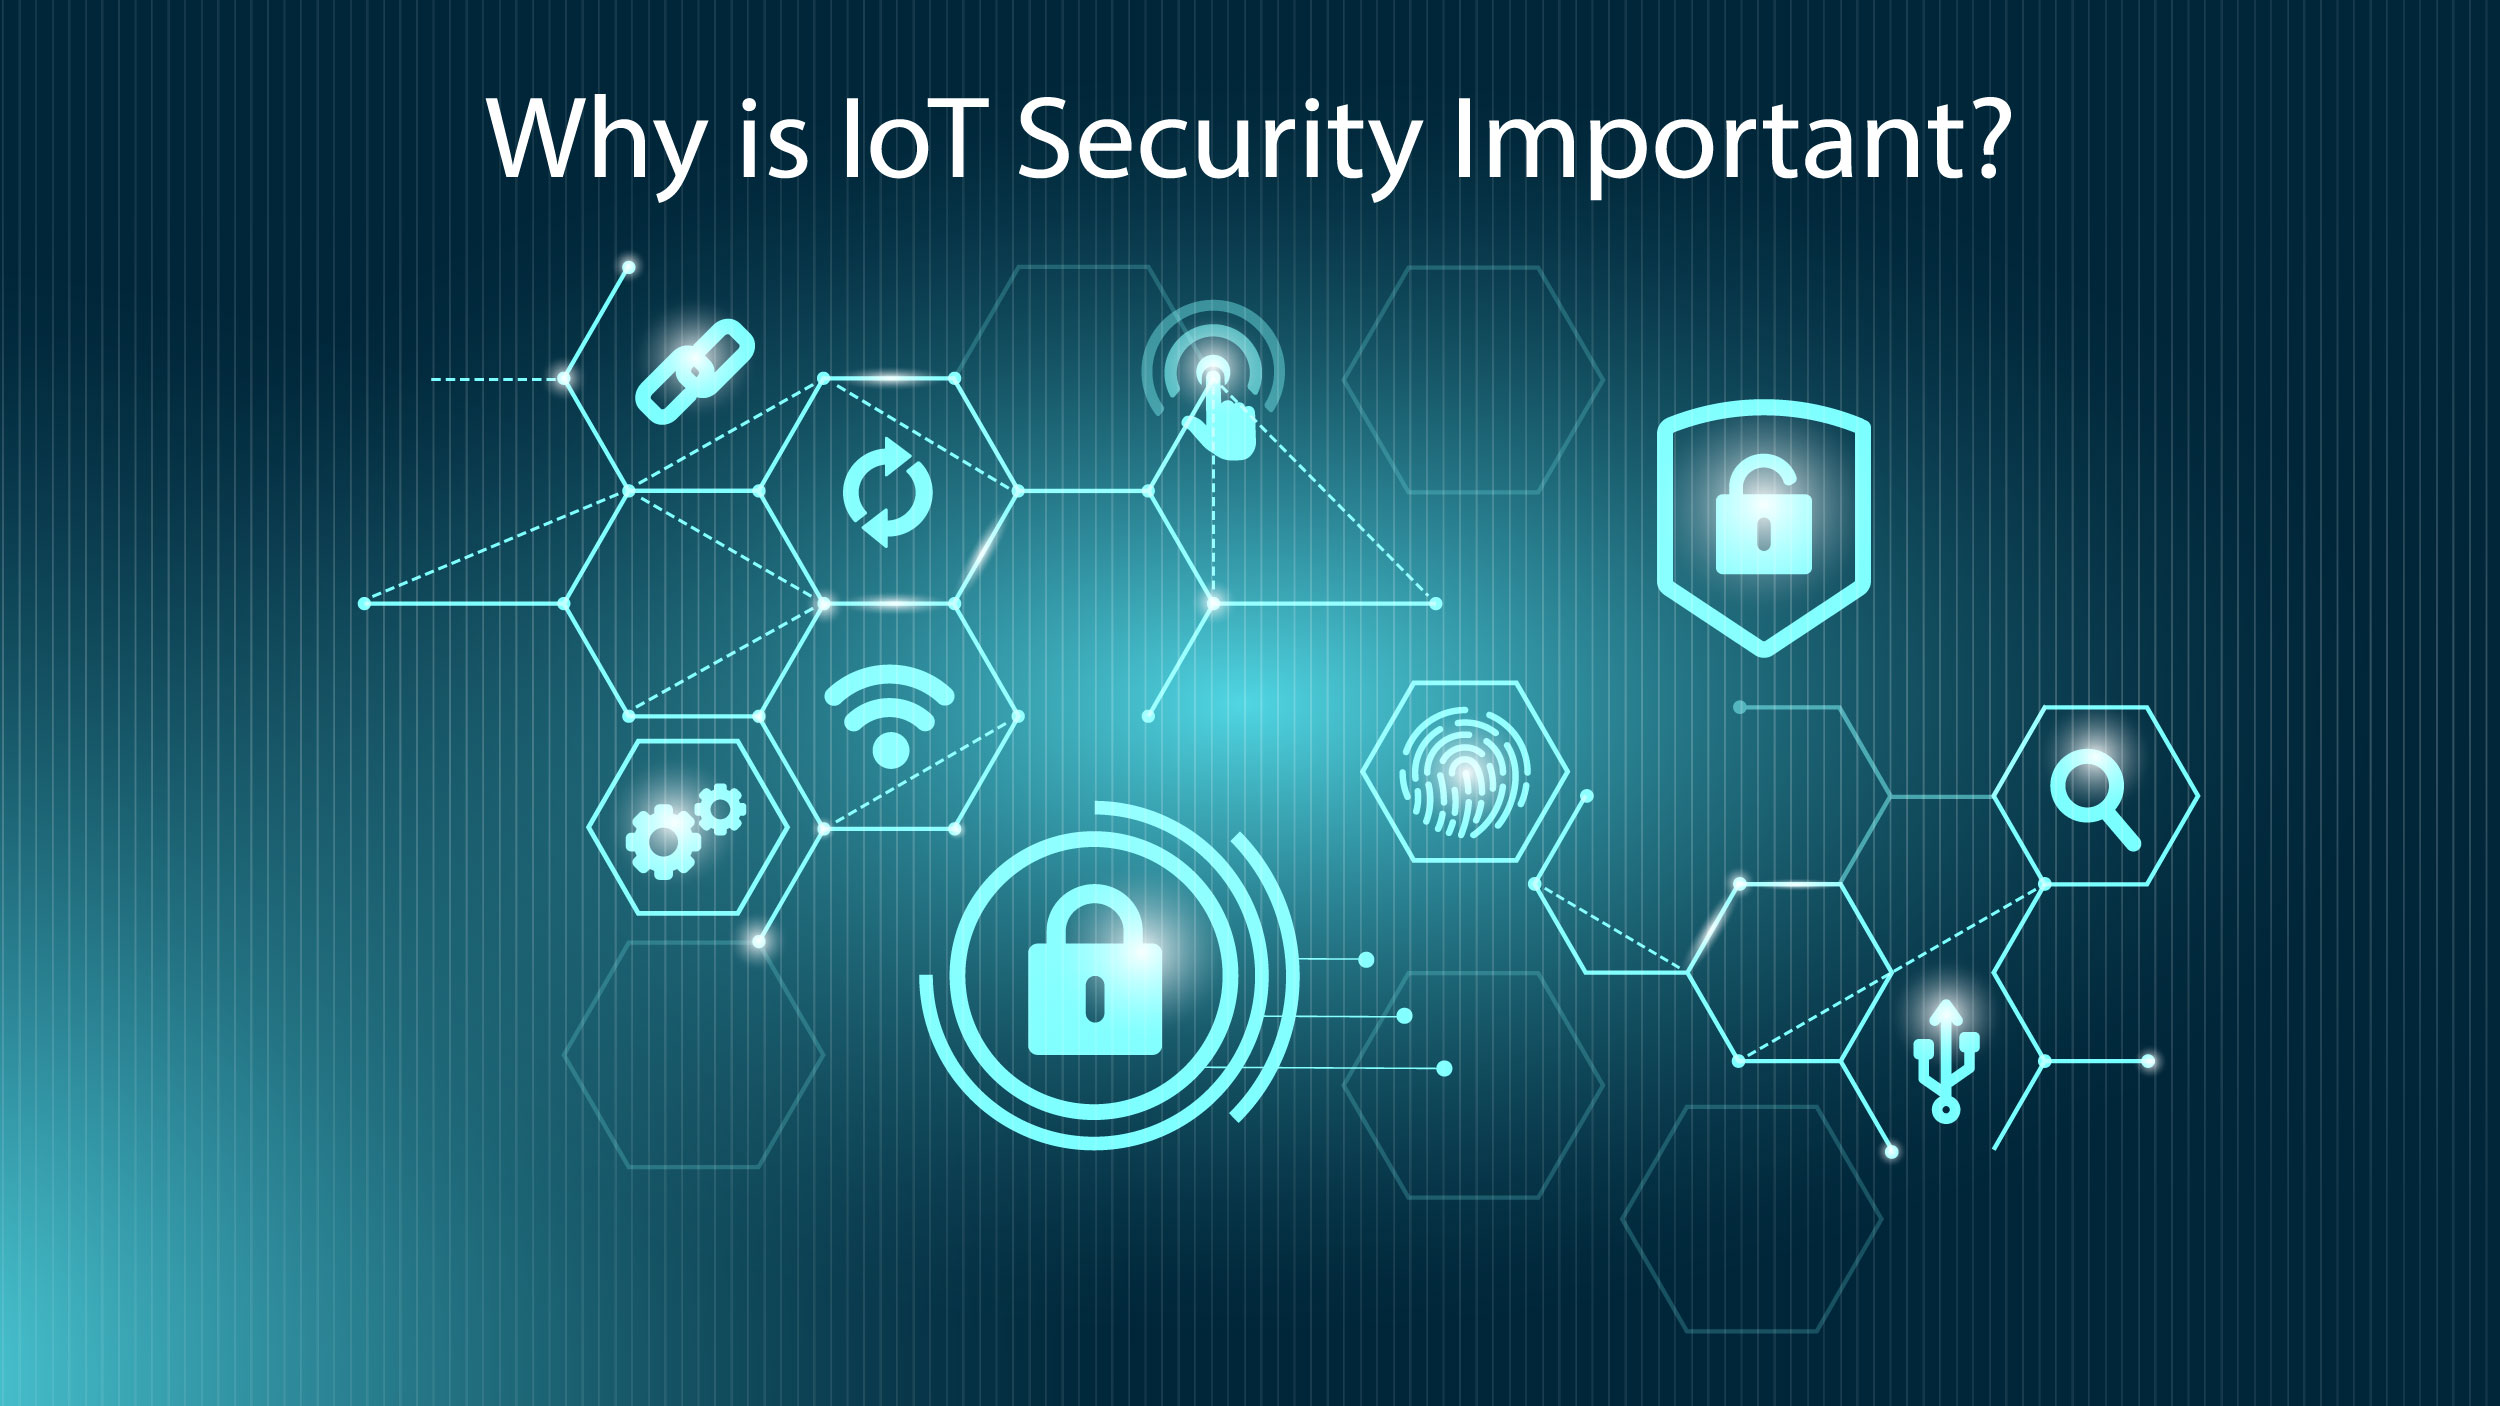  IoT Security